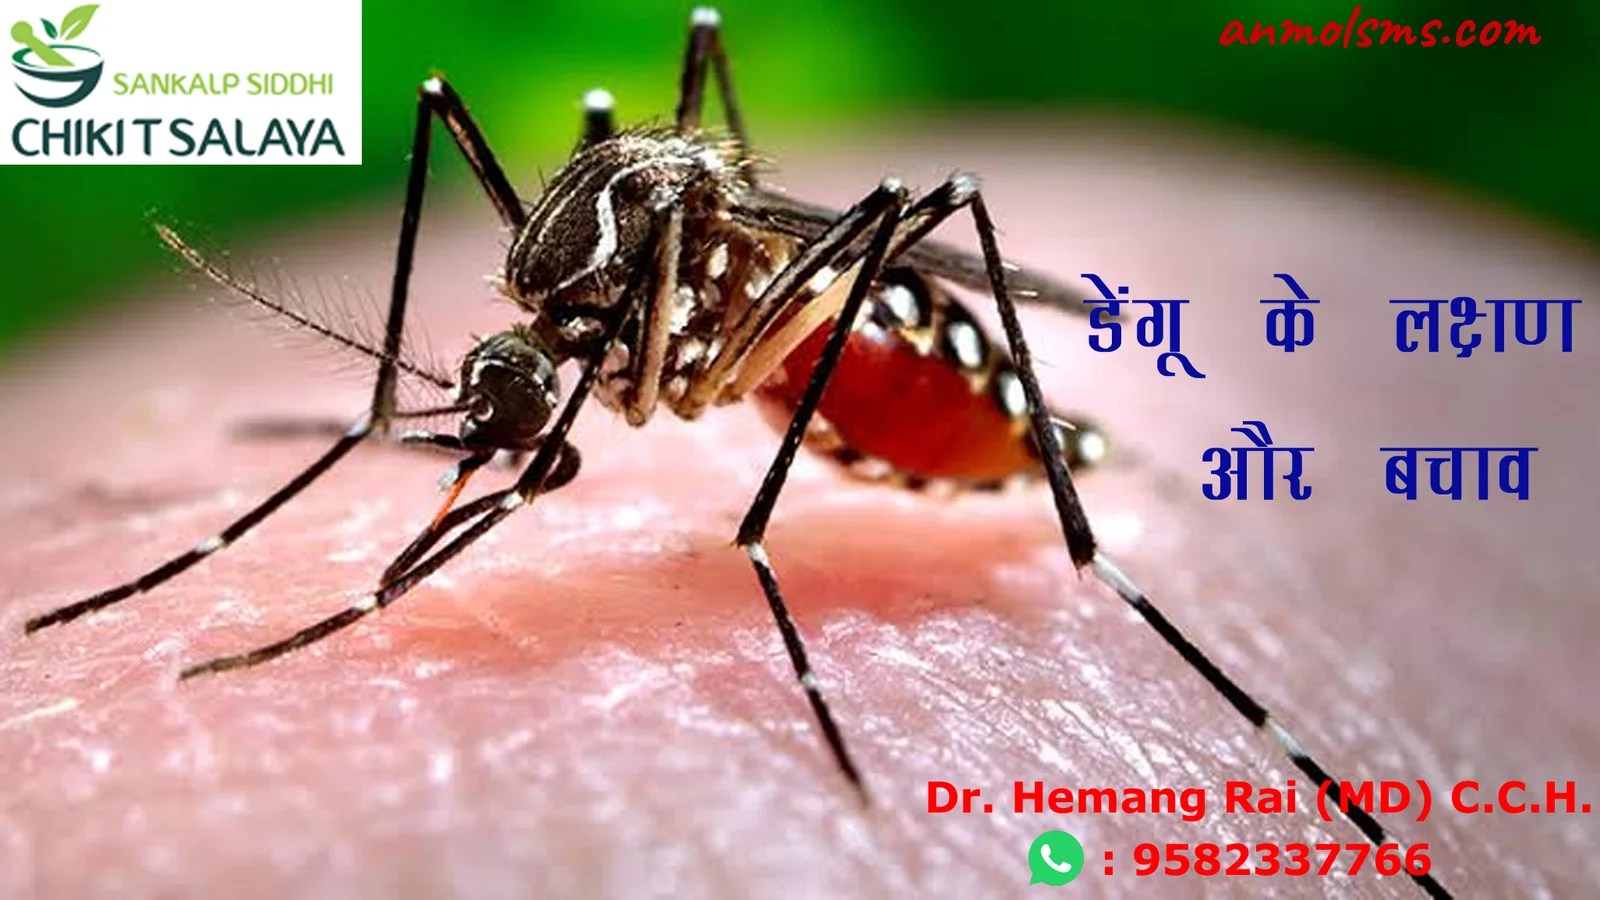 Dengue symptoms and home remedies